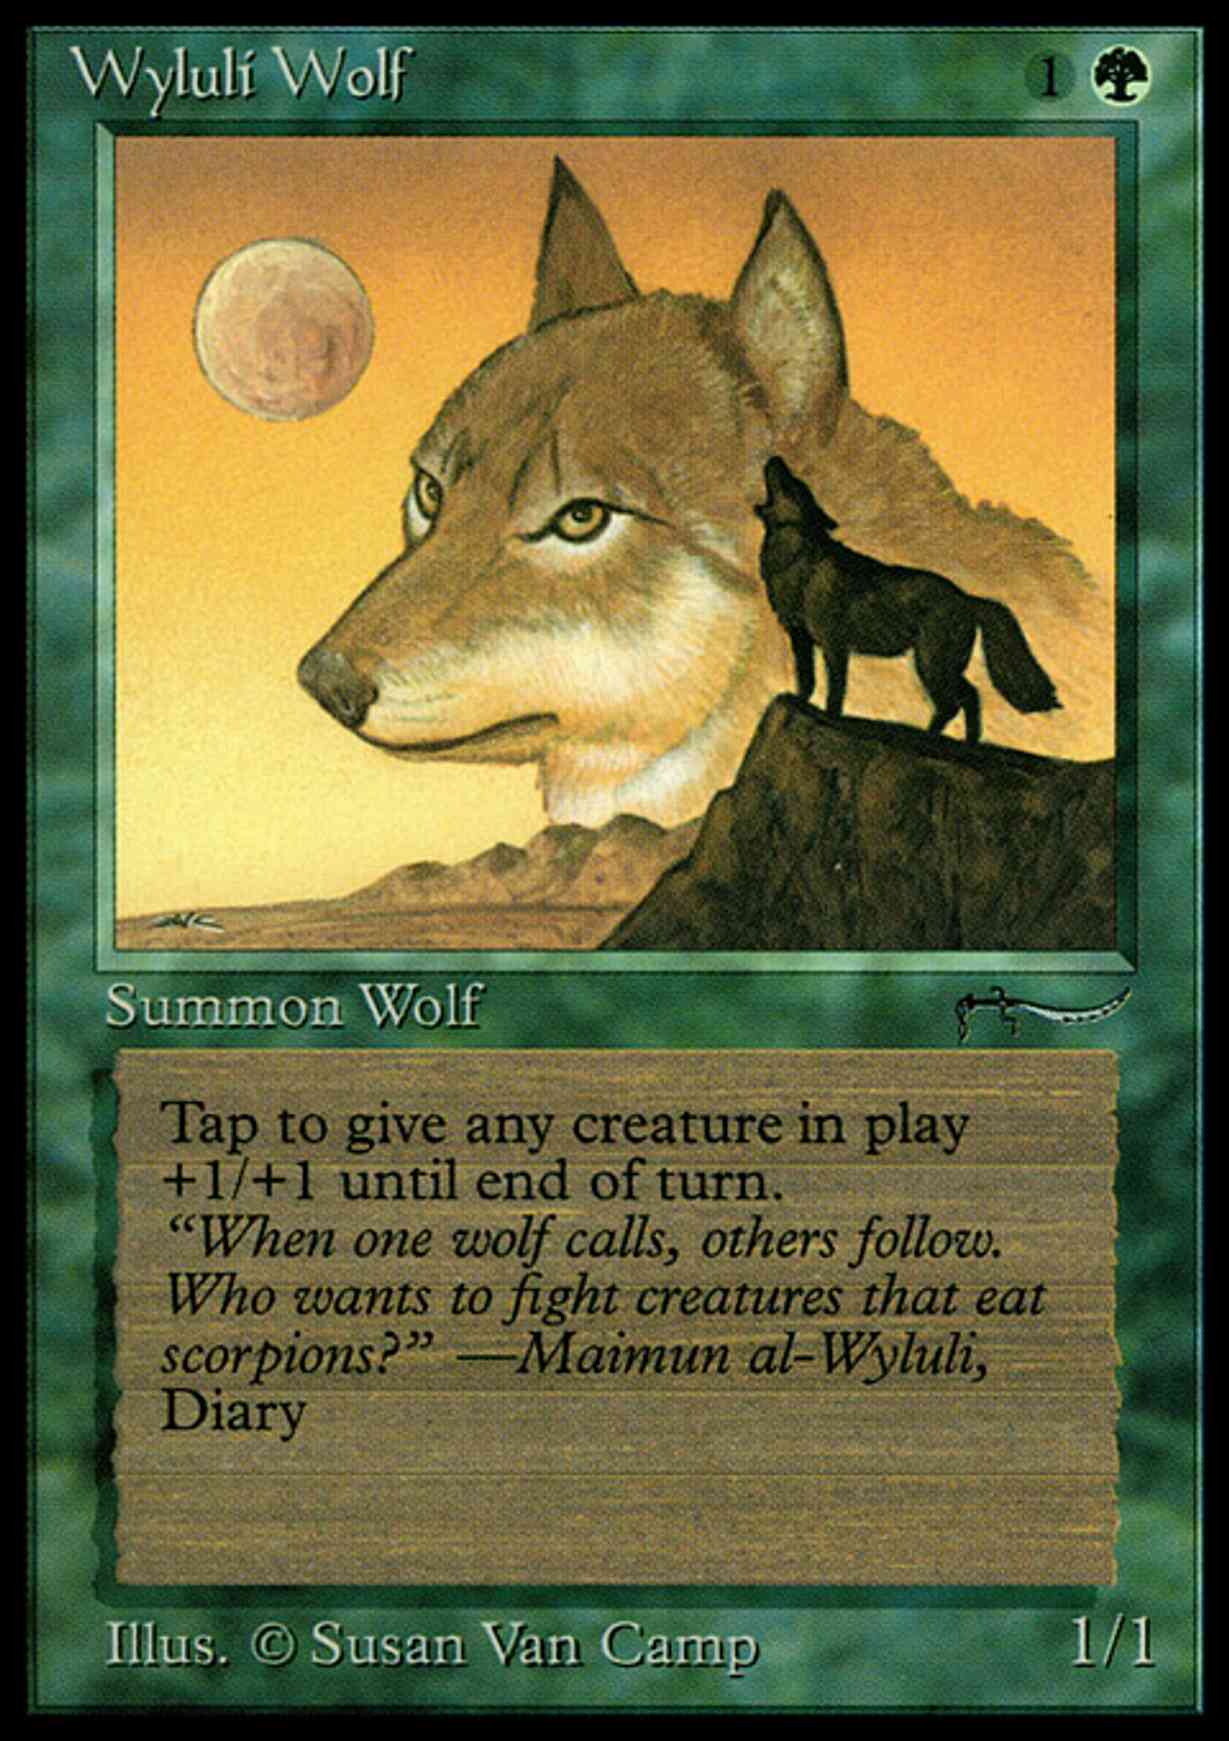 Wyluli Wolf magic card front